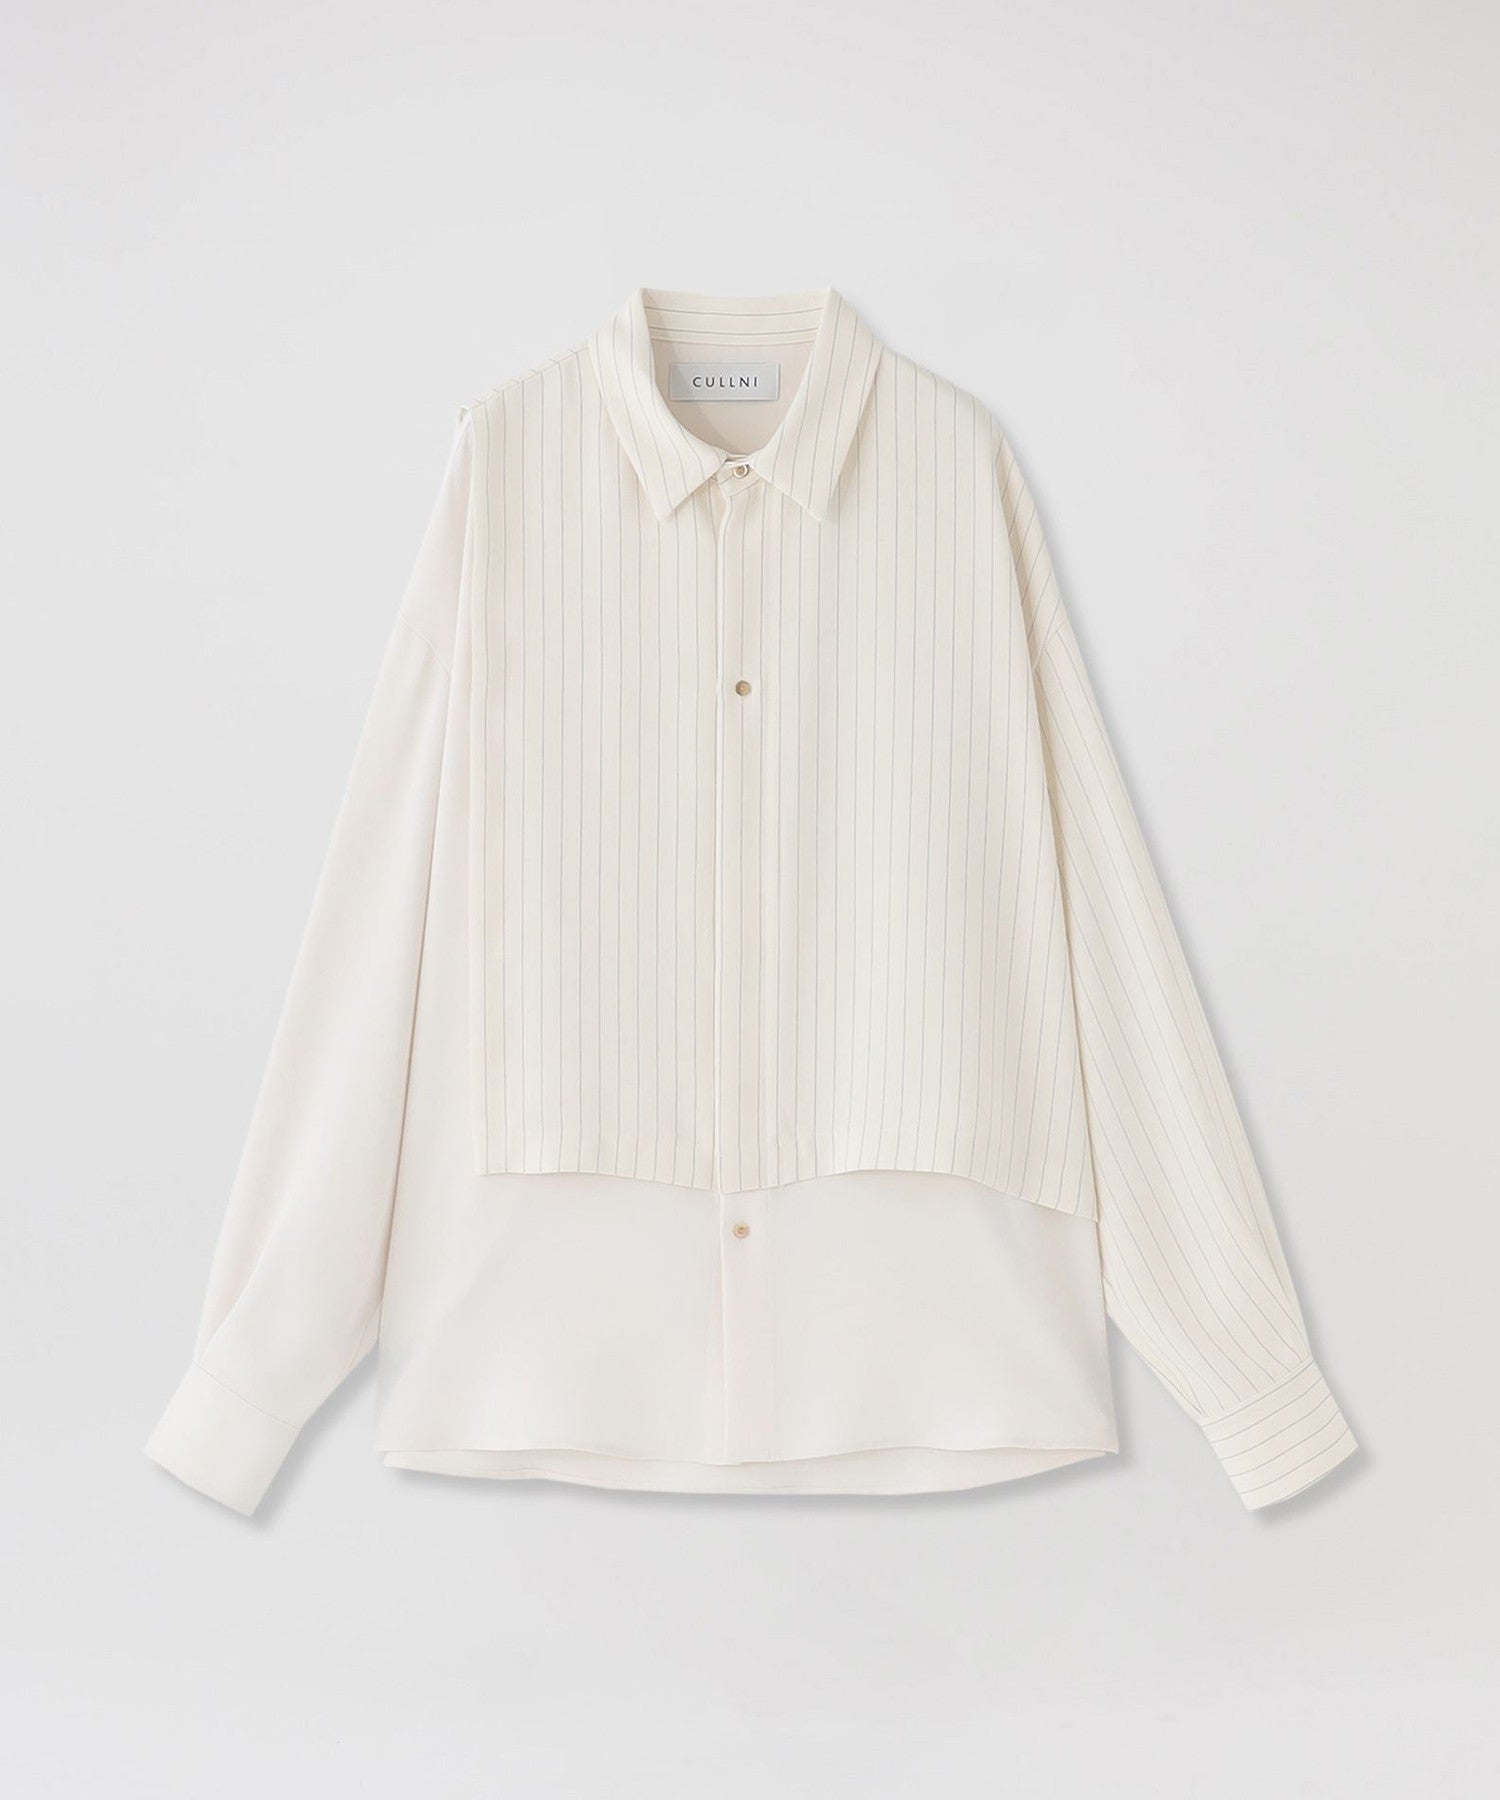 【CULLNI】ストライプシャツ Asymmetrical Stripe Shirt 23-AW-013 